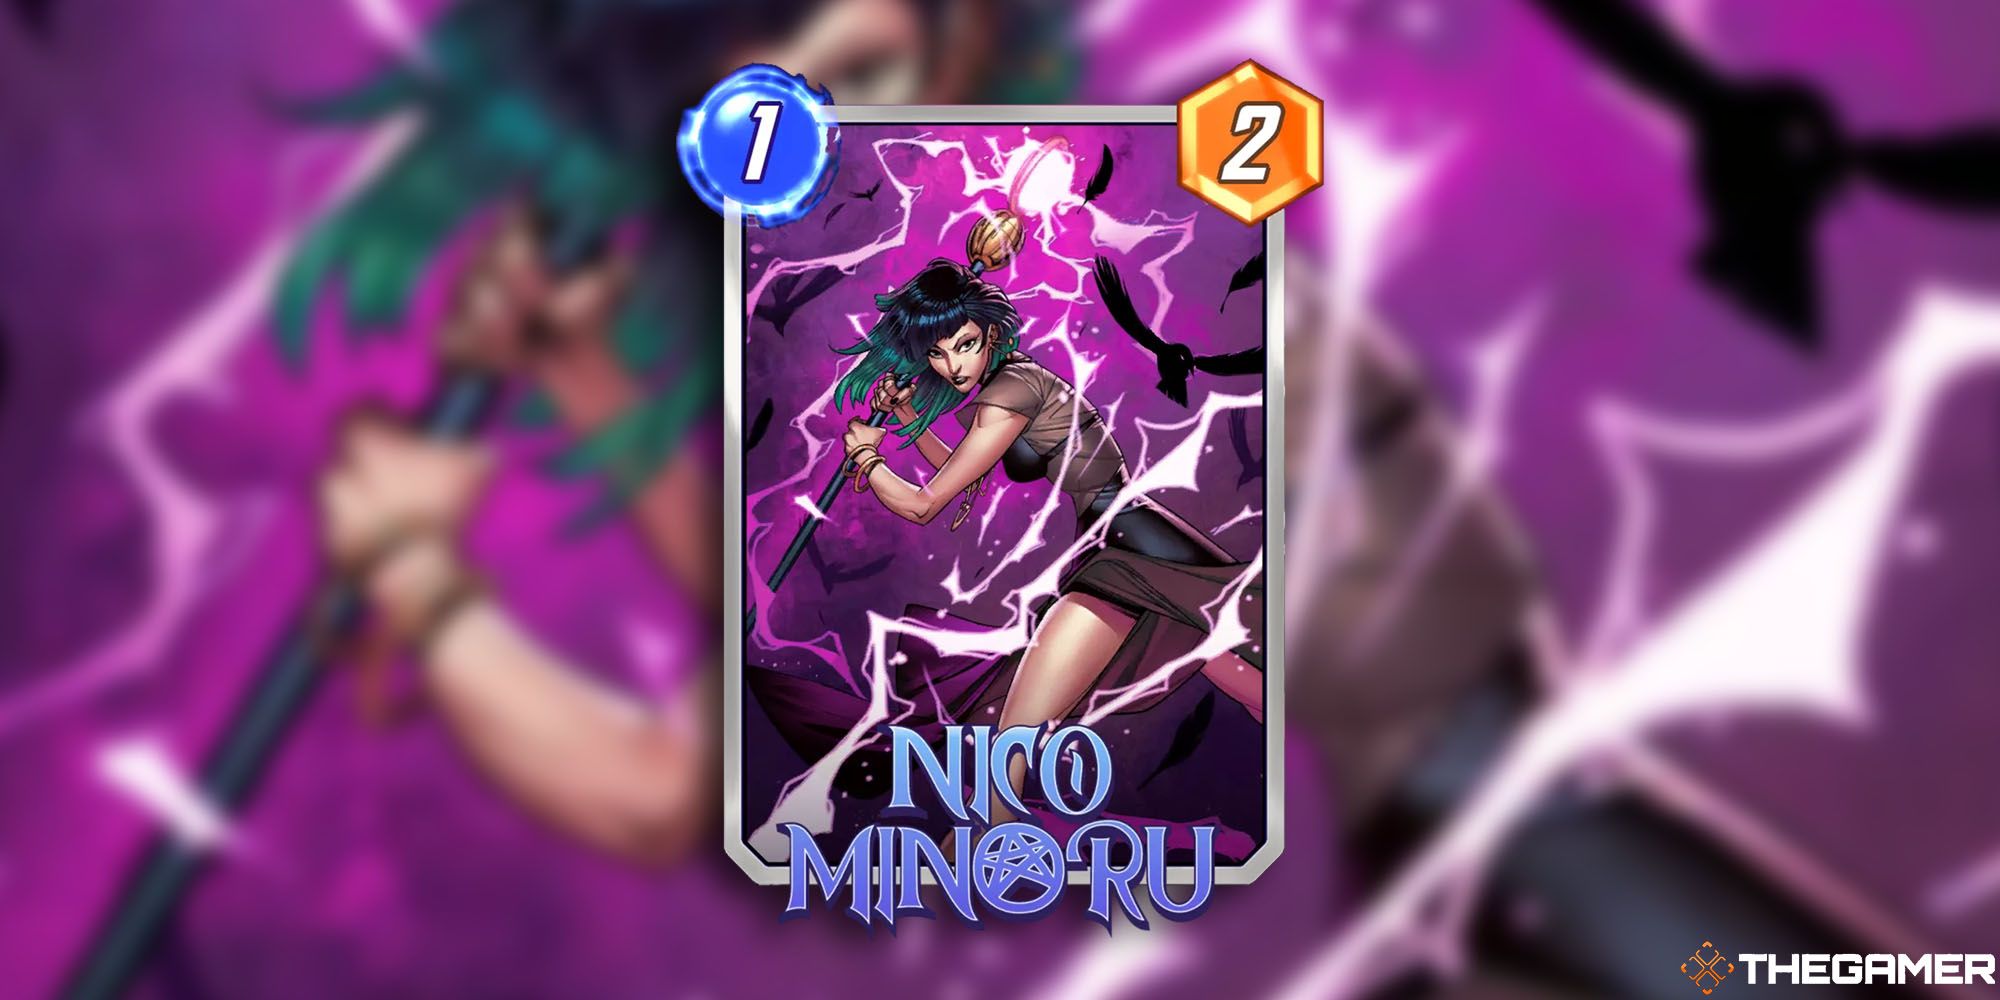 Nico Minoru card in Marvel Snap.